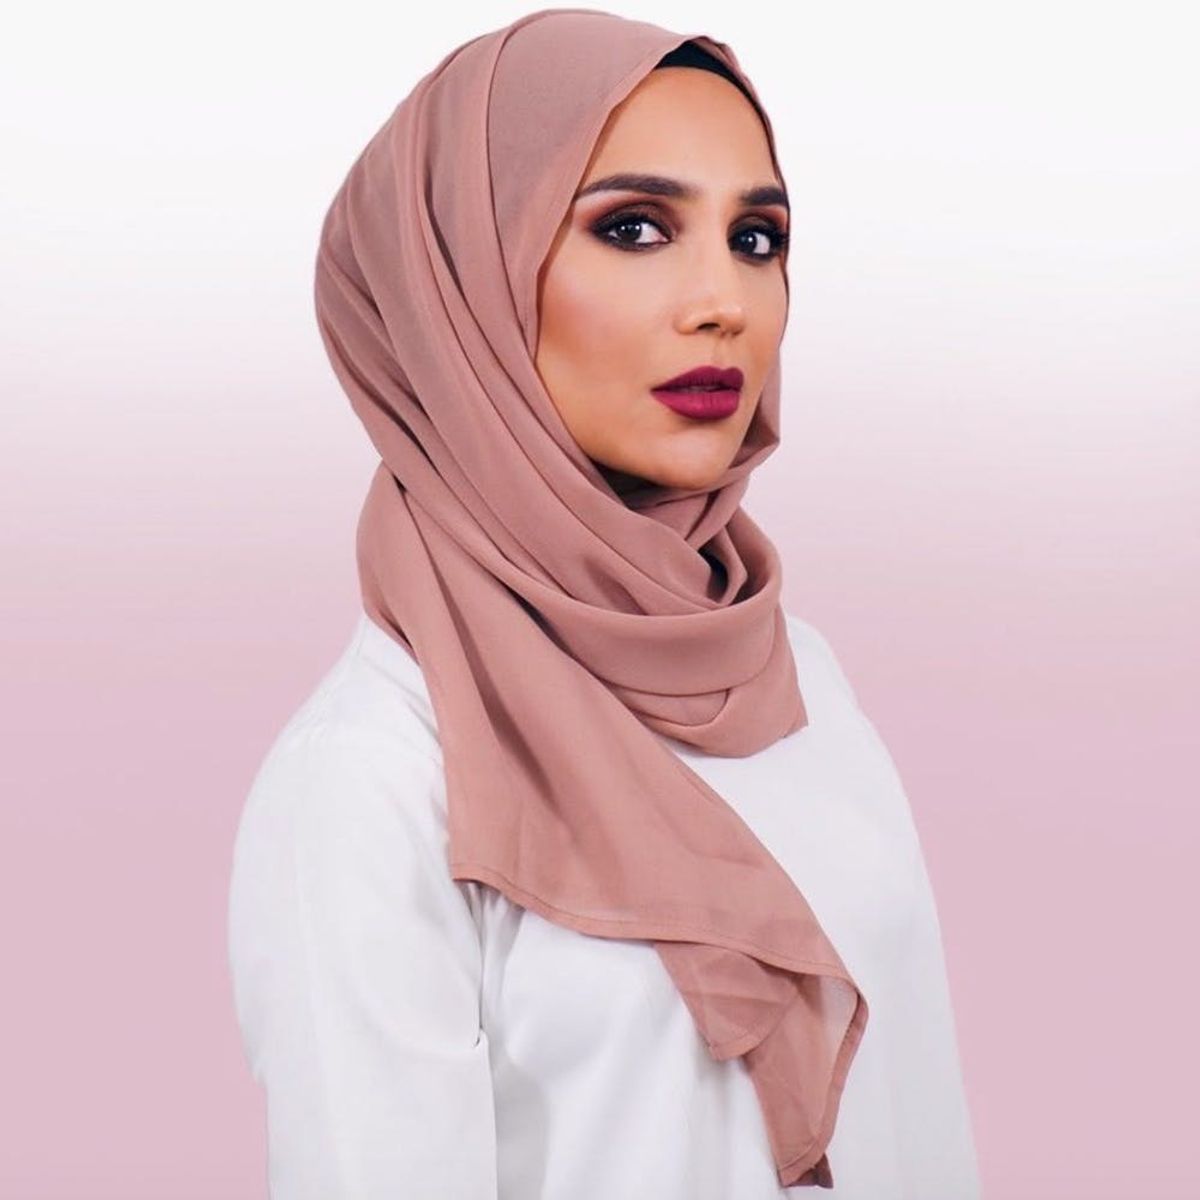 Meet Amena Khan: The First Model to Wear a Hijab in a Major Hair Campaign